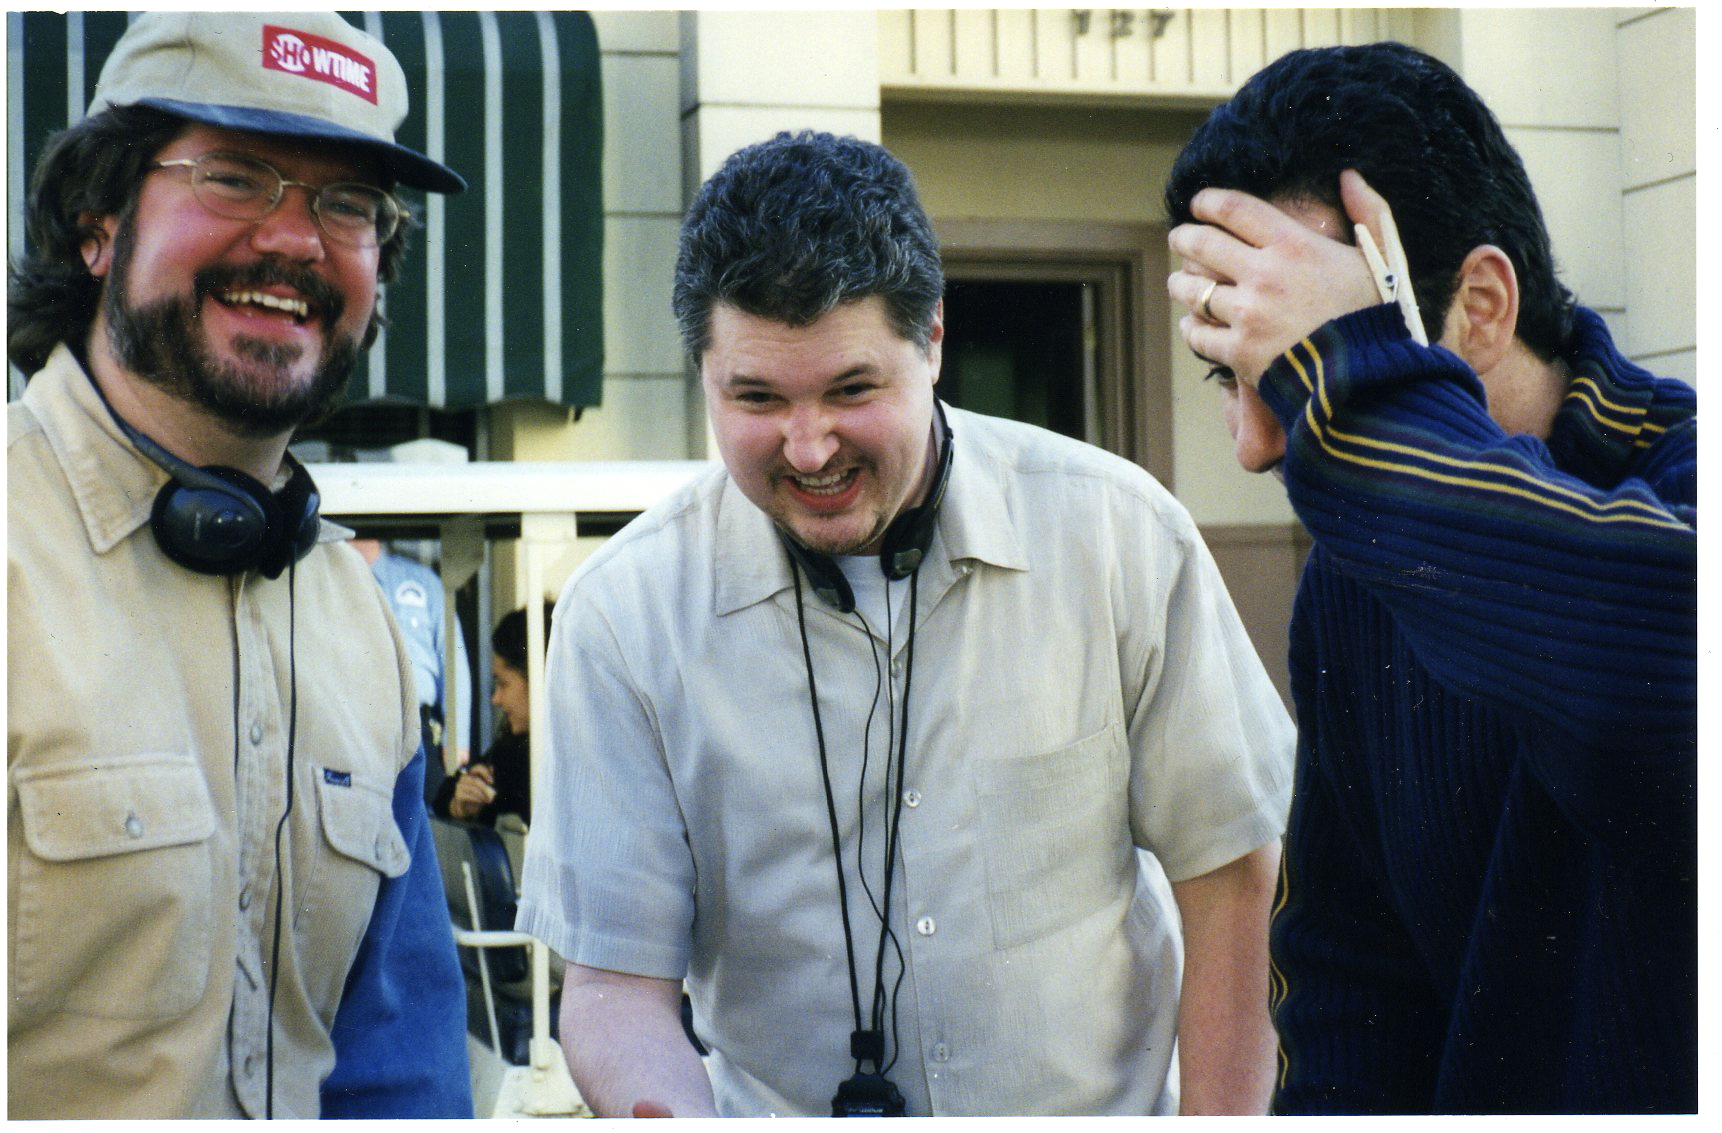 Director Steven Jon Whritner, producer Michael Buckley & line producer Jeff Waxman on the Paramount lot.